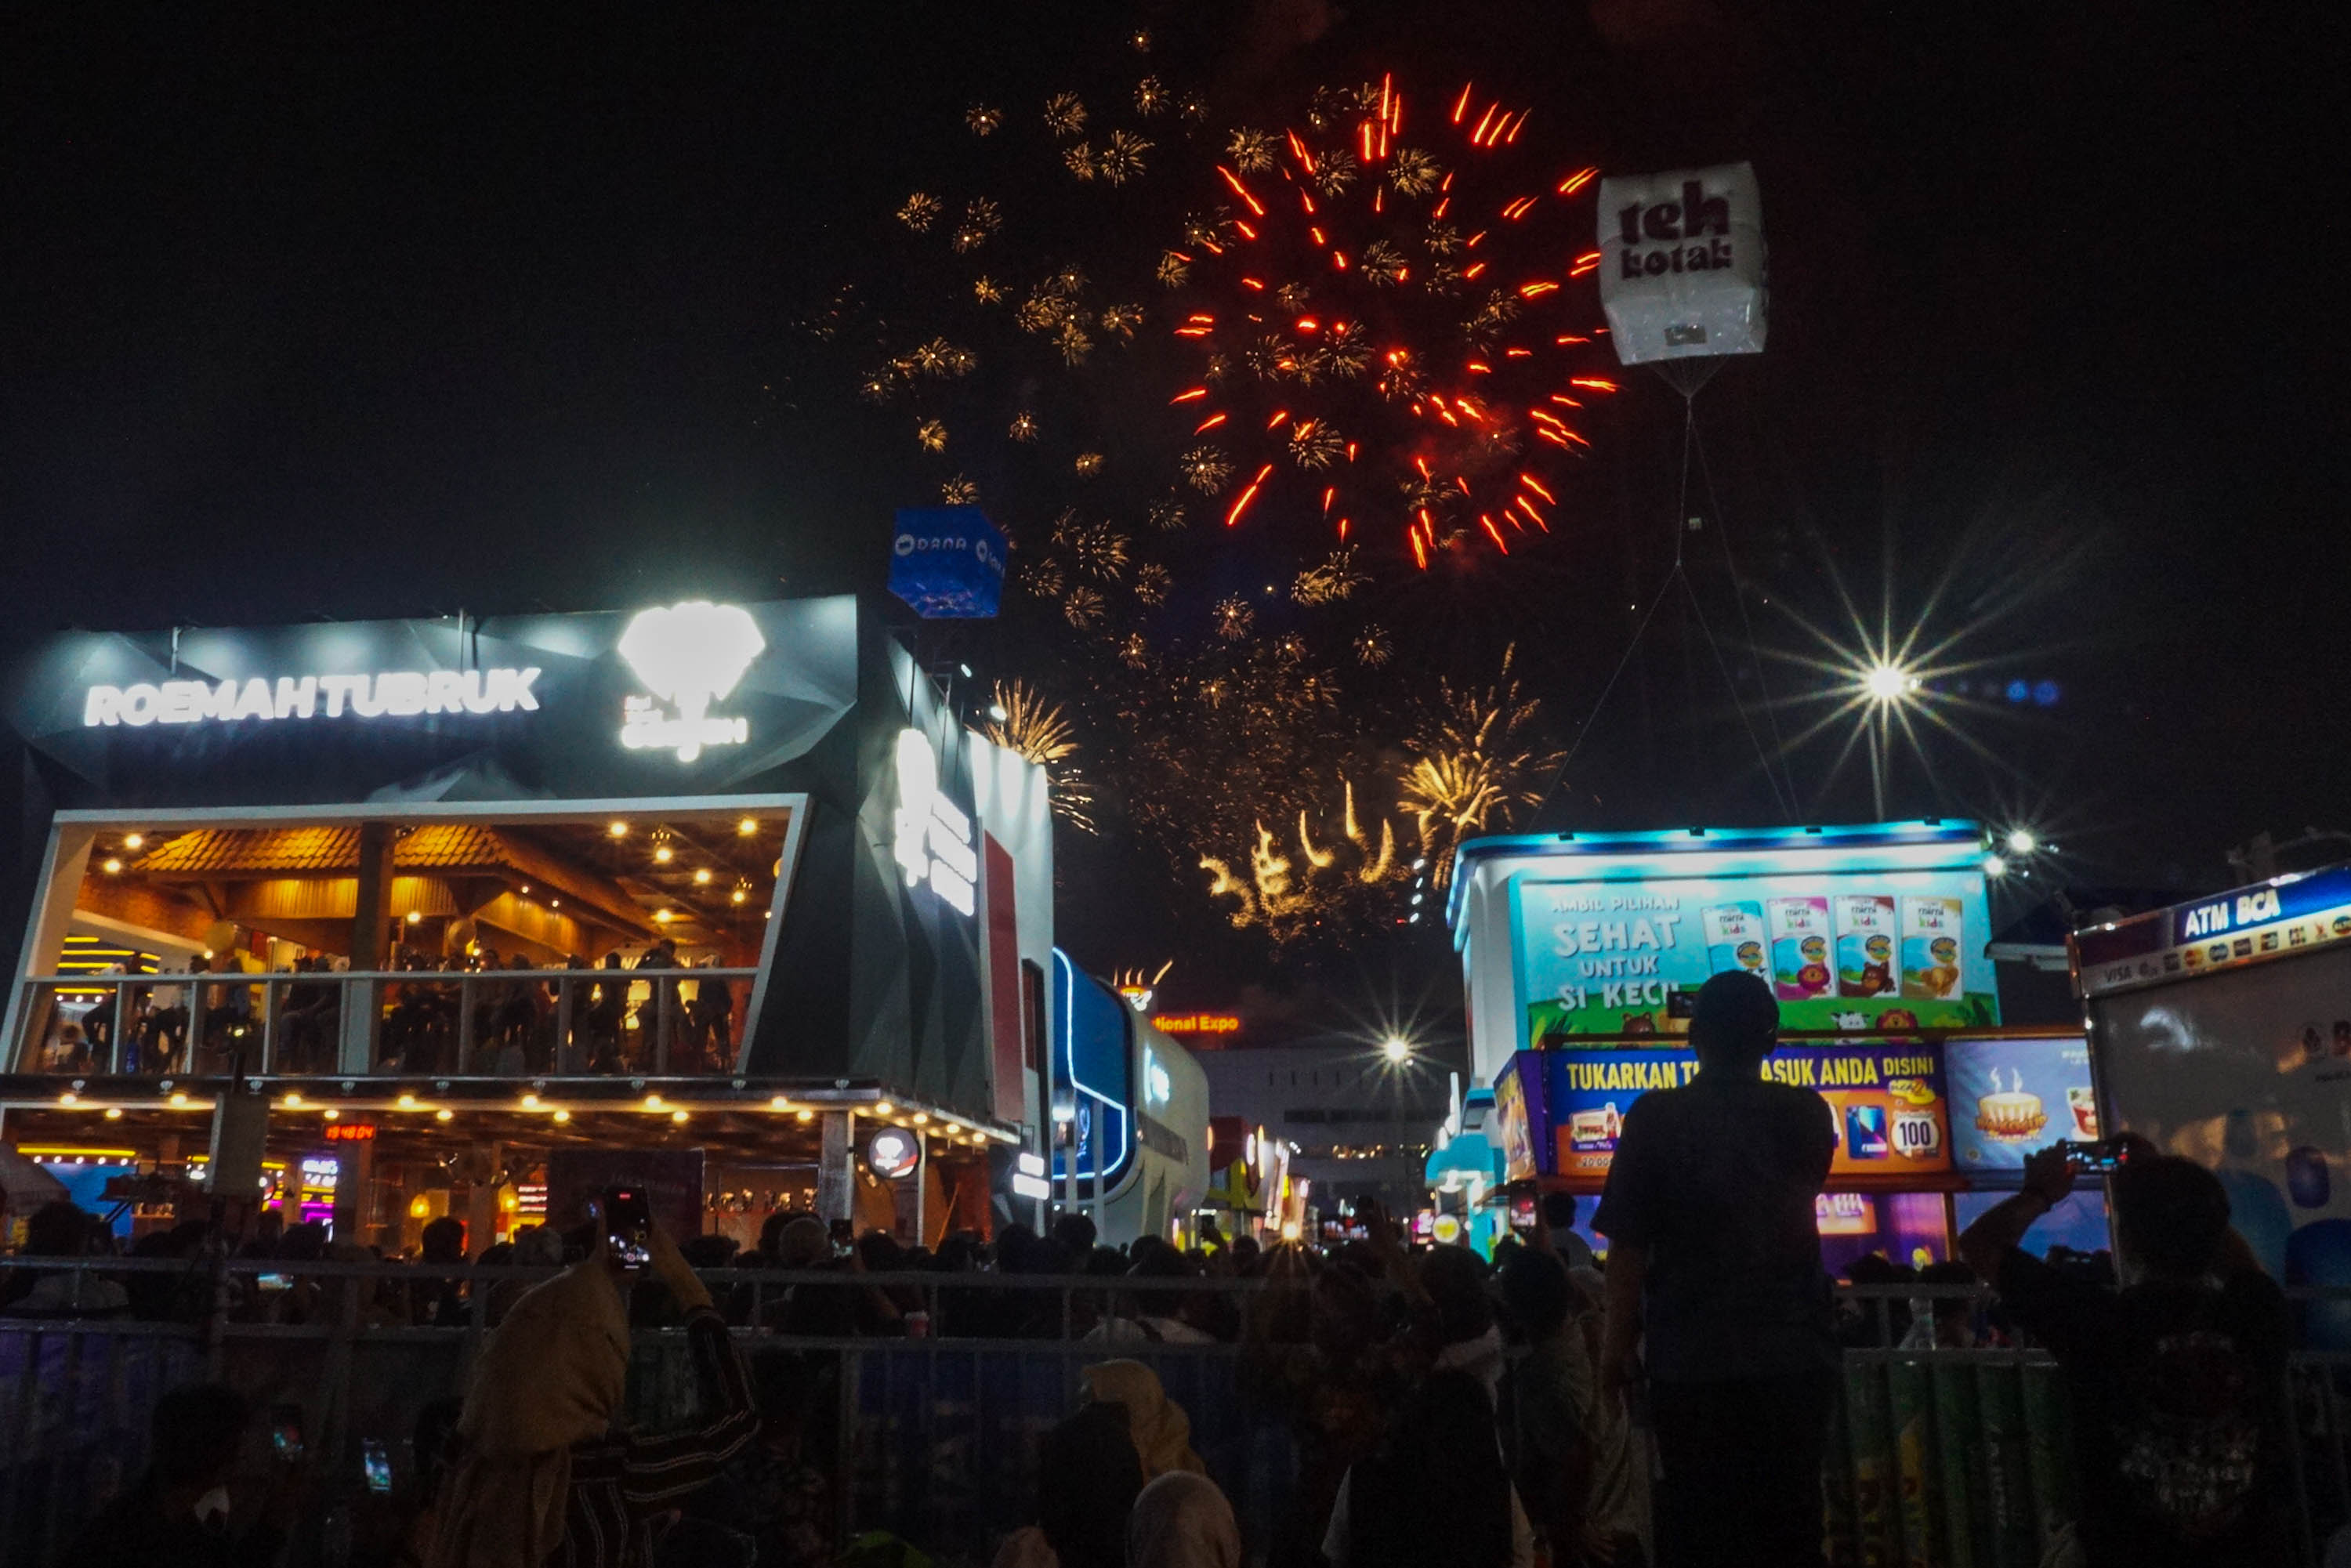 Suasana pesta kembang api saat perayaan HUT DKI ke-495 di Jakarta Fair, Kemayoran, Selasa, 21 Juni 2022 malam. Foto: Ismail Pohan/TrenAsia